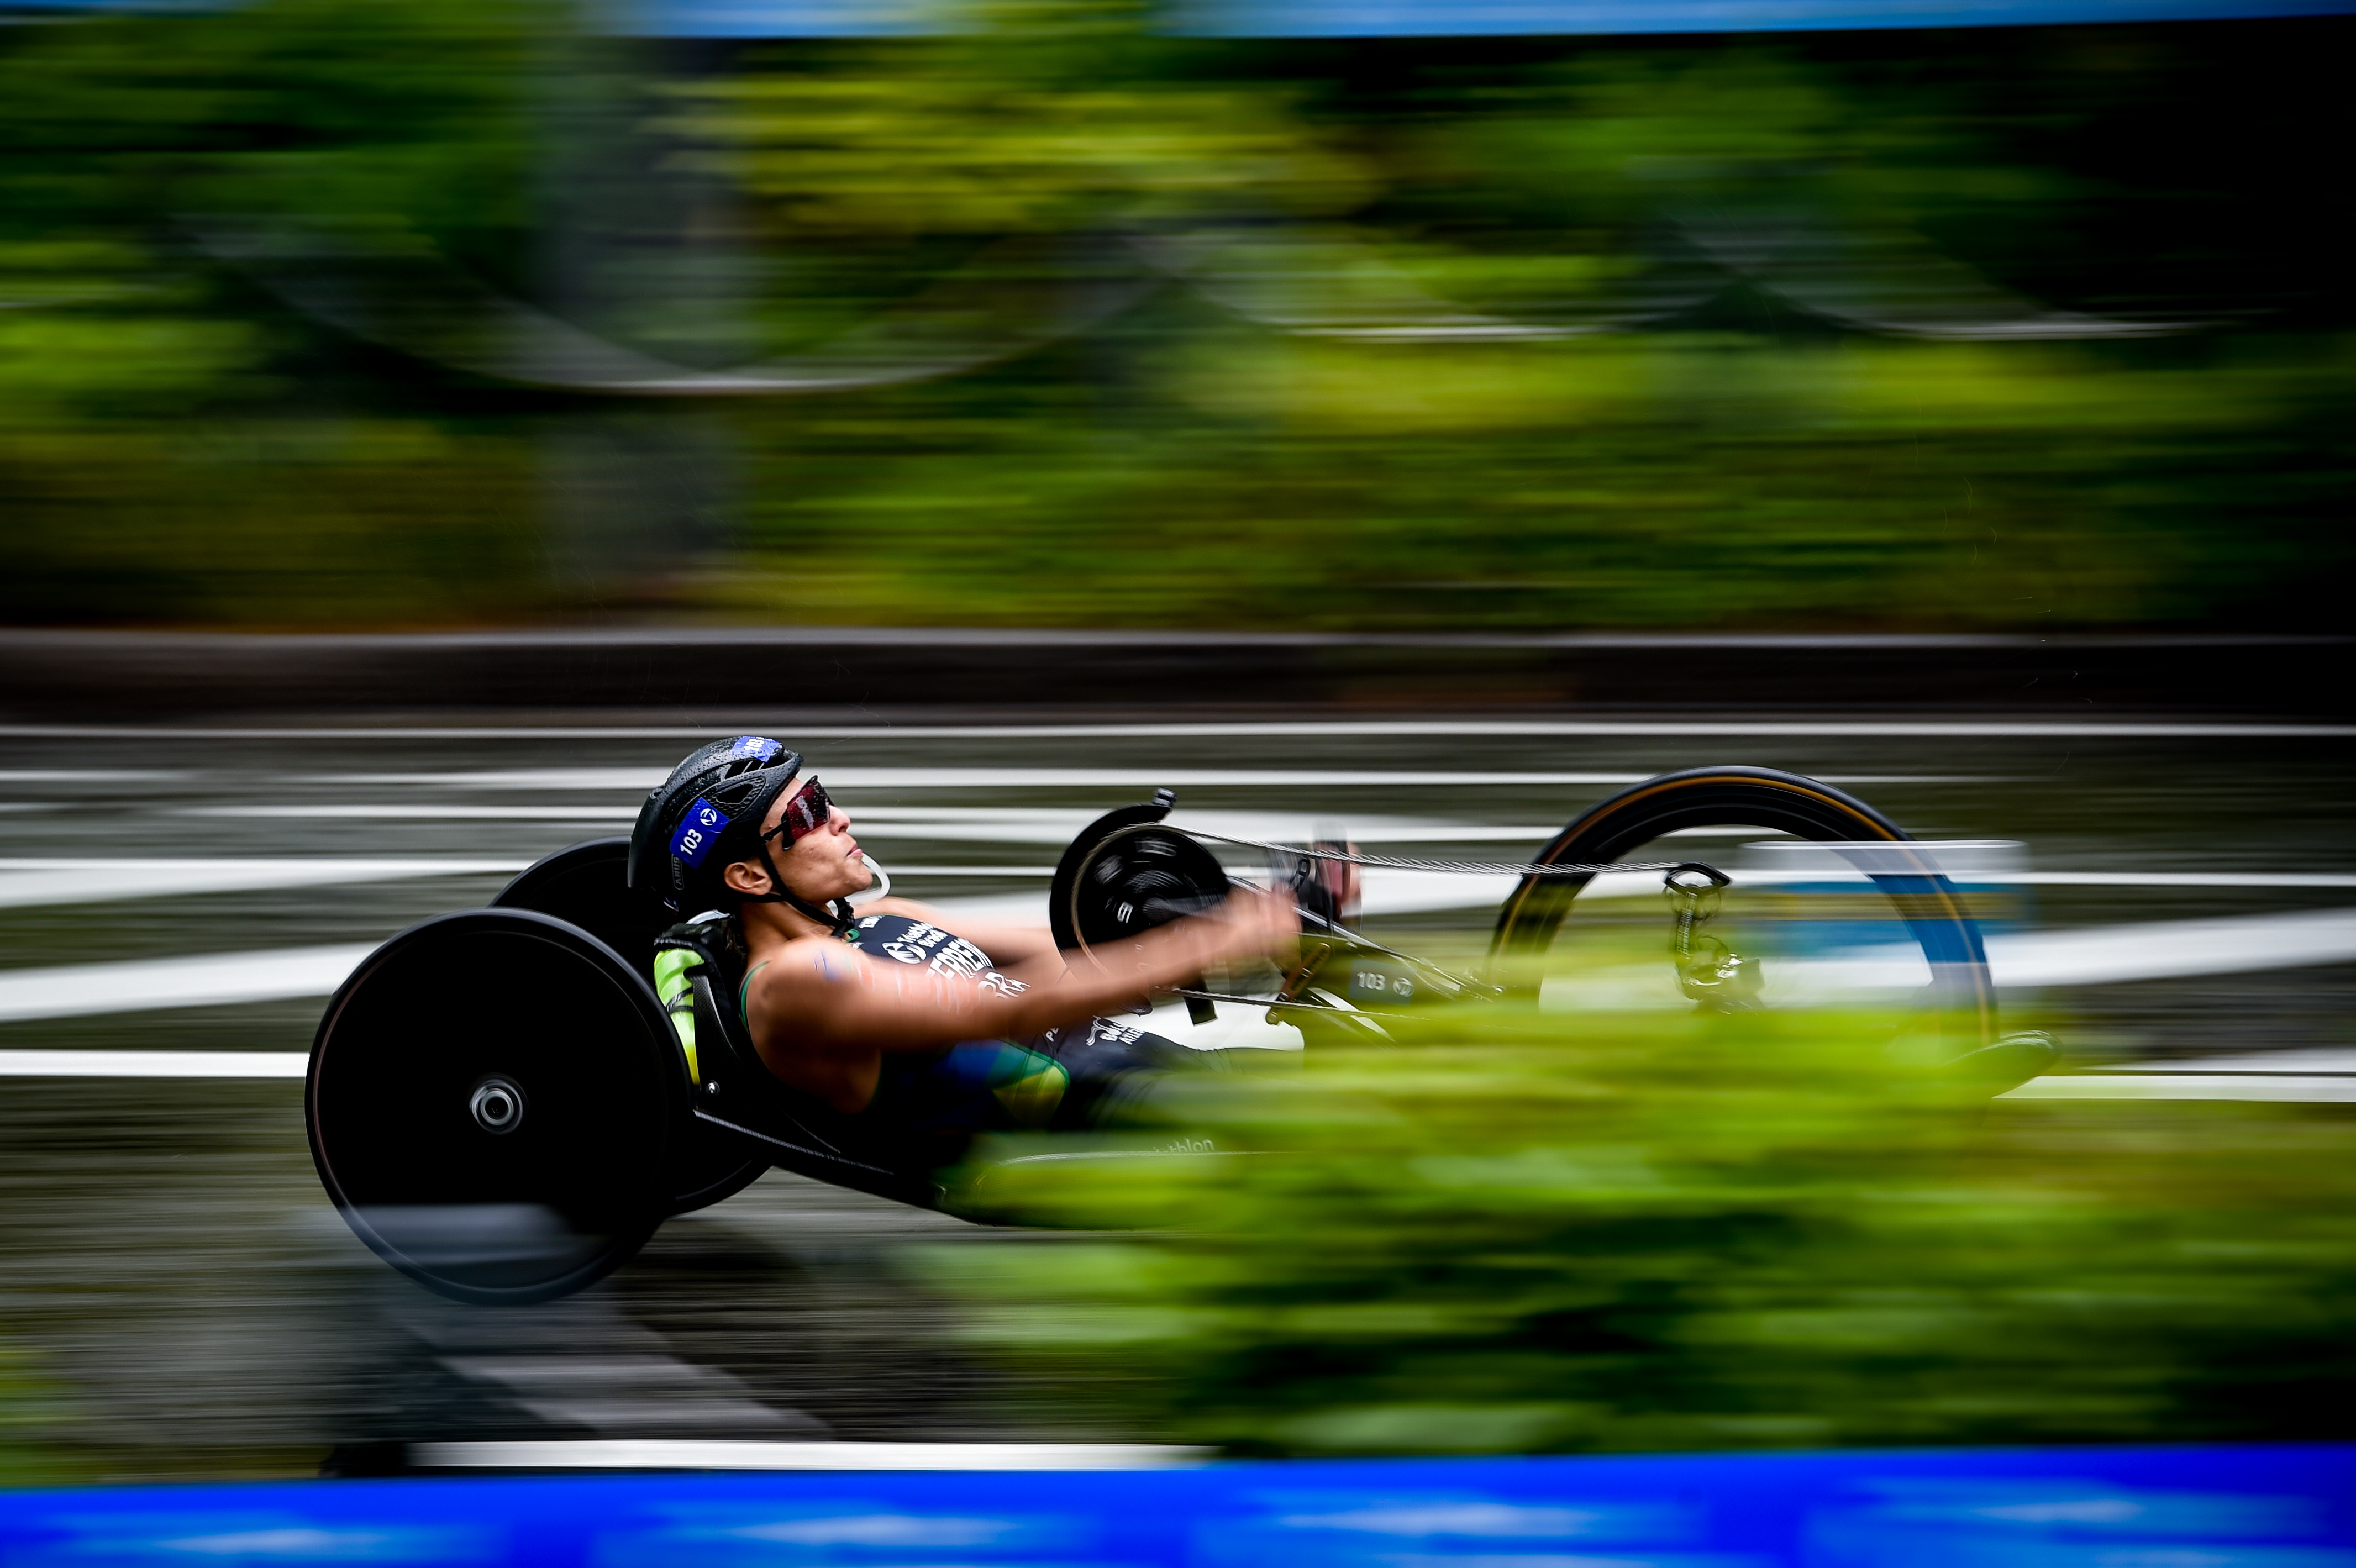 Worlds best para triathletes chase Paralympic points in Swansea • World Triathlon